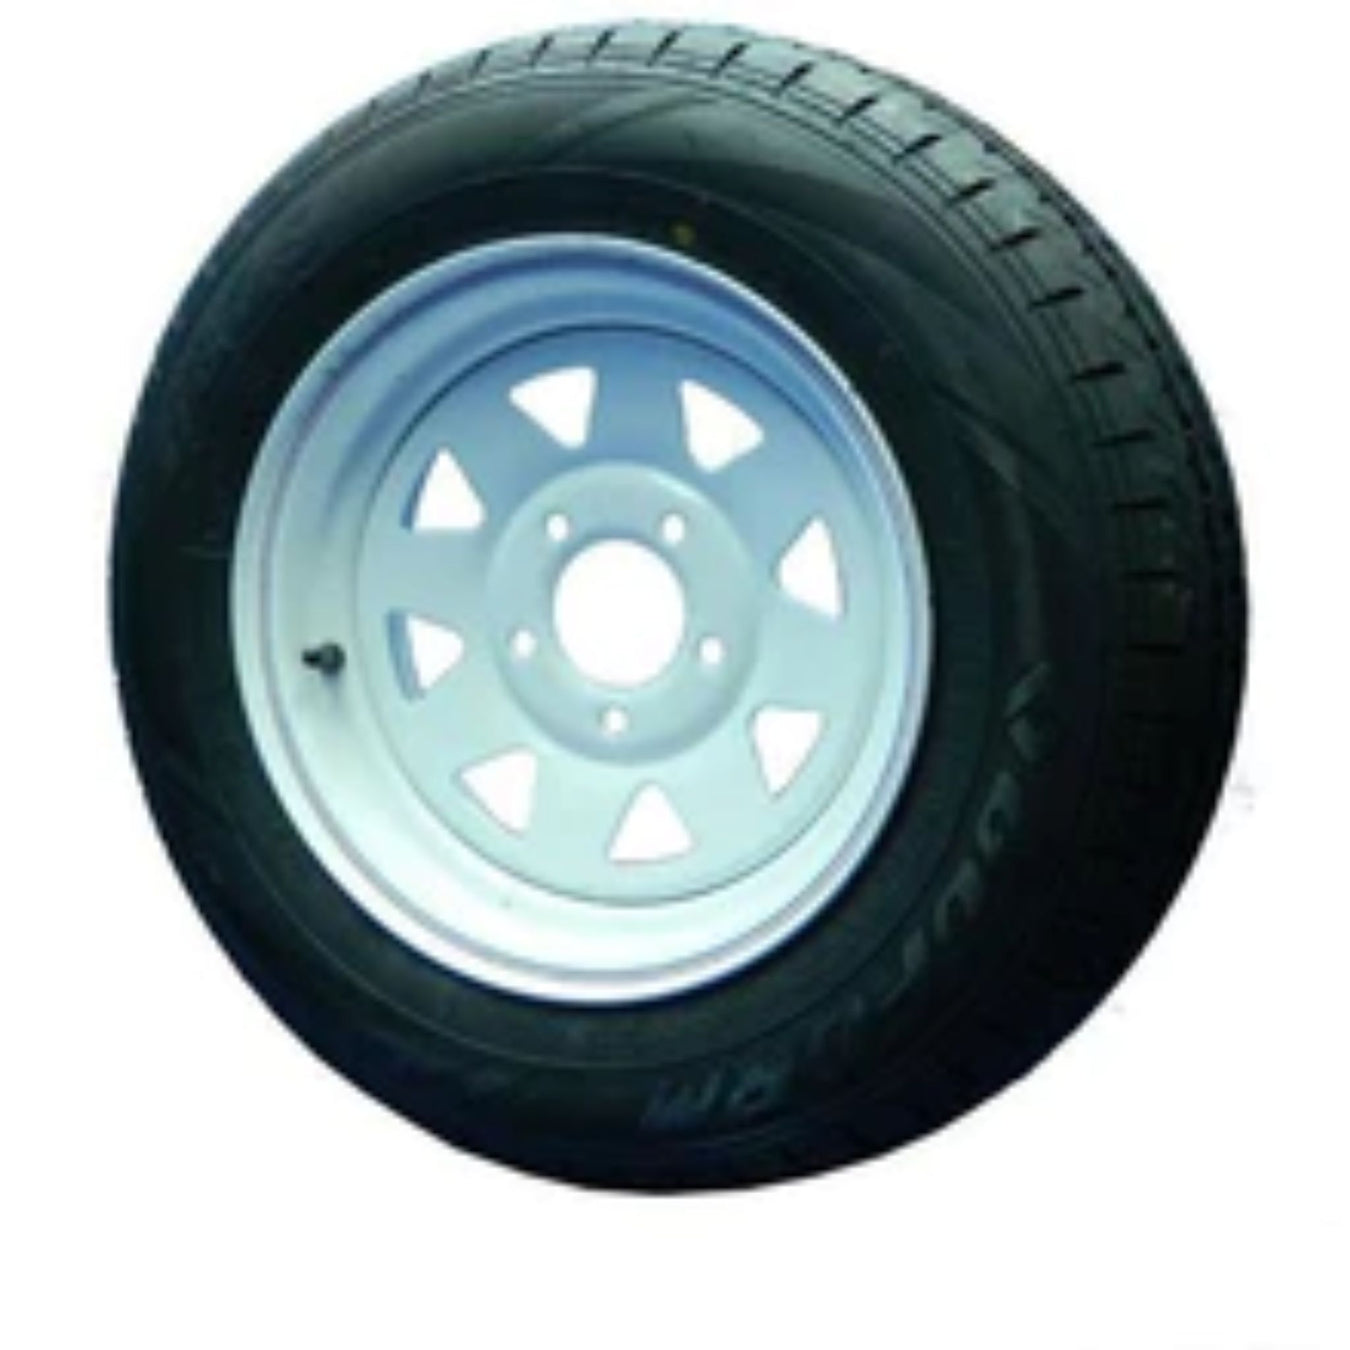 Wheels, Tyres, Rims & Accessories